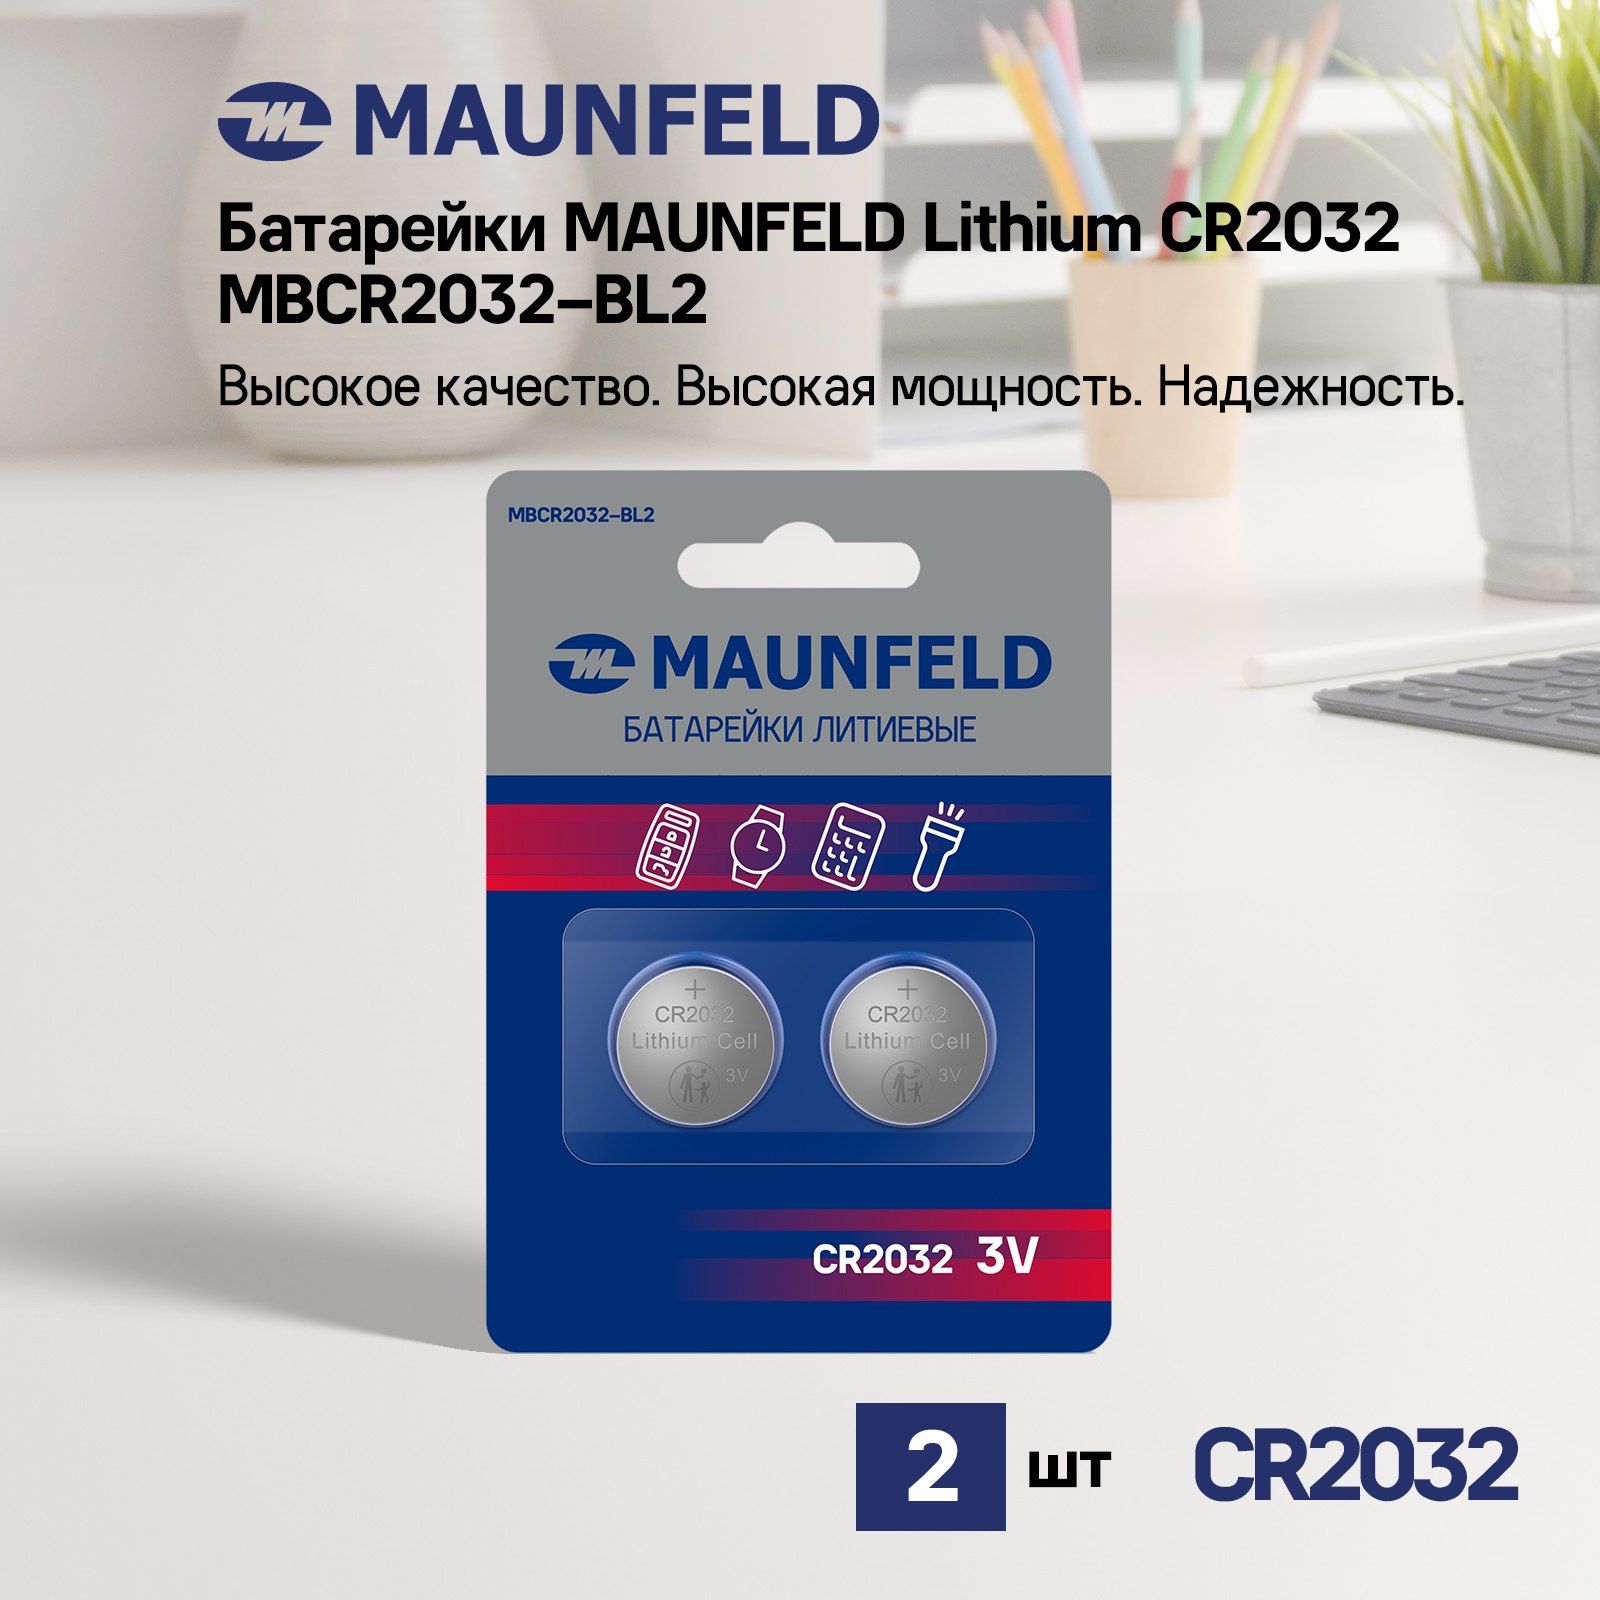 Батарейки MAUNFELD Lithium CR2032 MBCR2032-BL2, блистер 2 шт. батарейки energizer lithium cr1632 1 шт бл 7638900411553